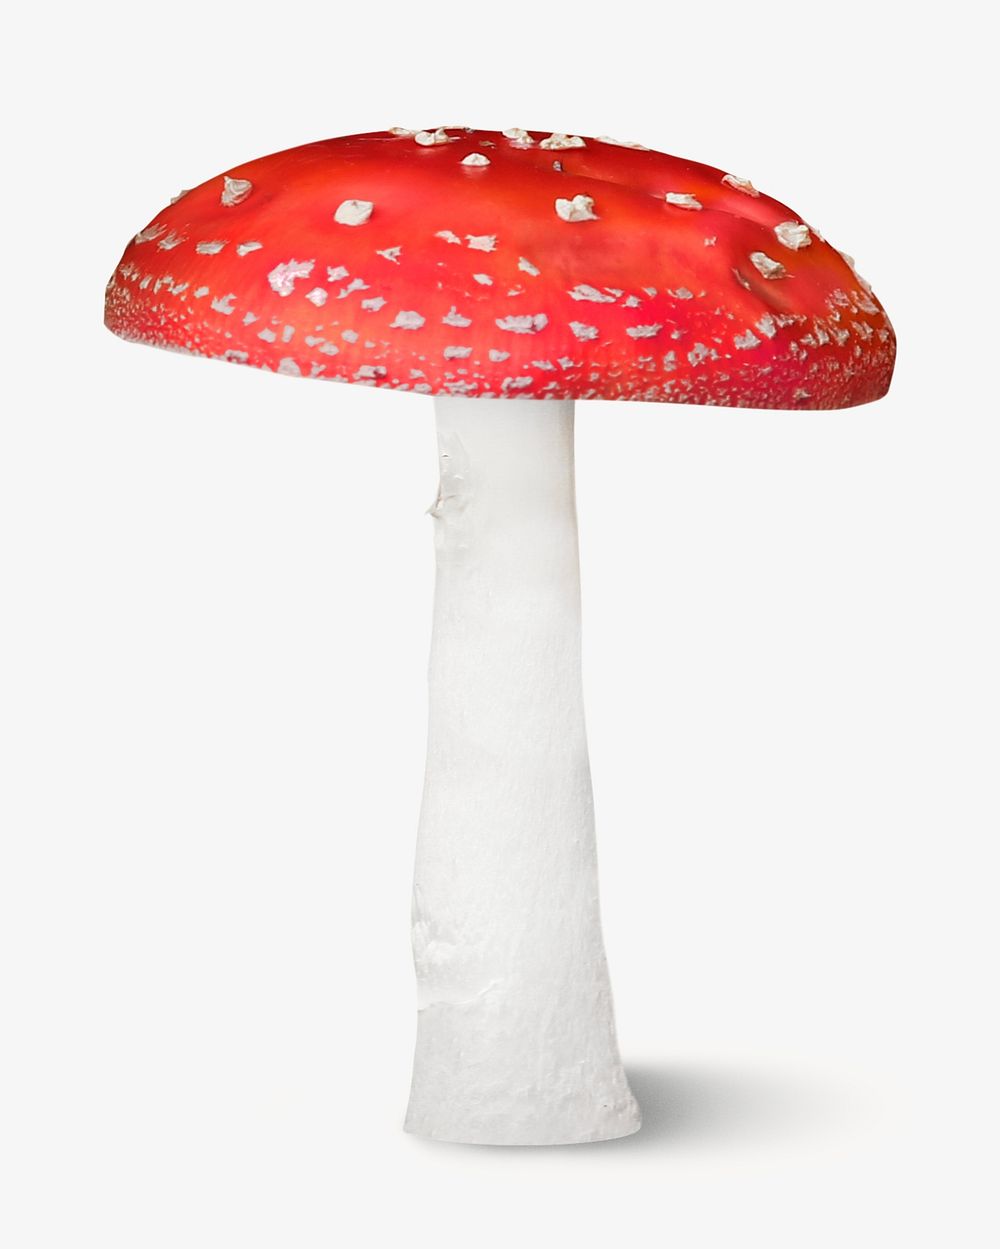 Fly amanita mushroom on white background